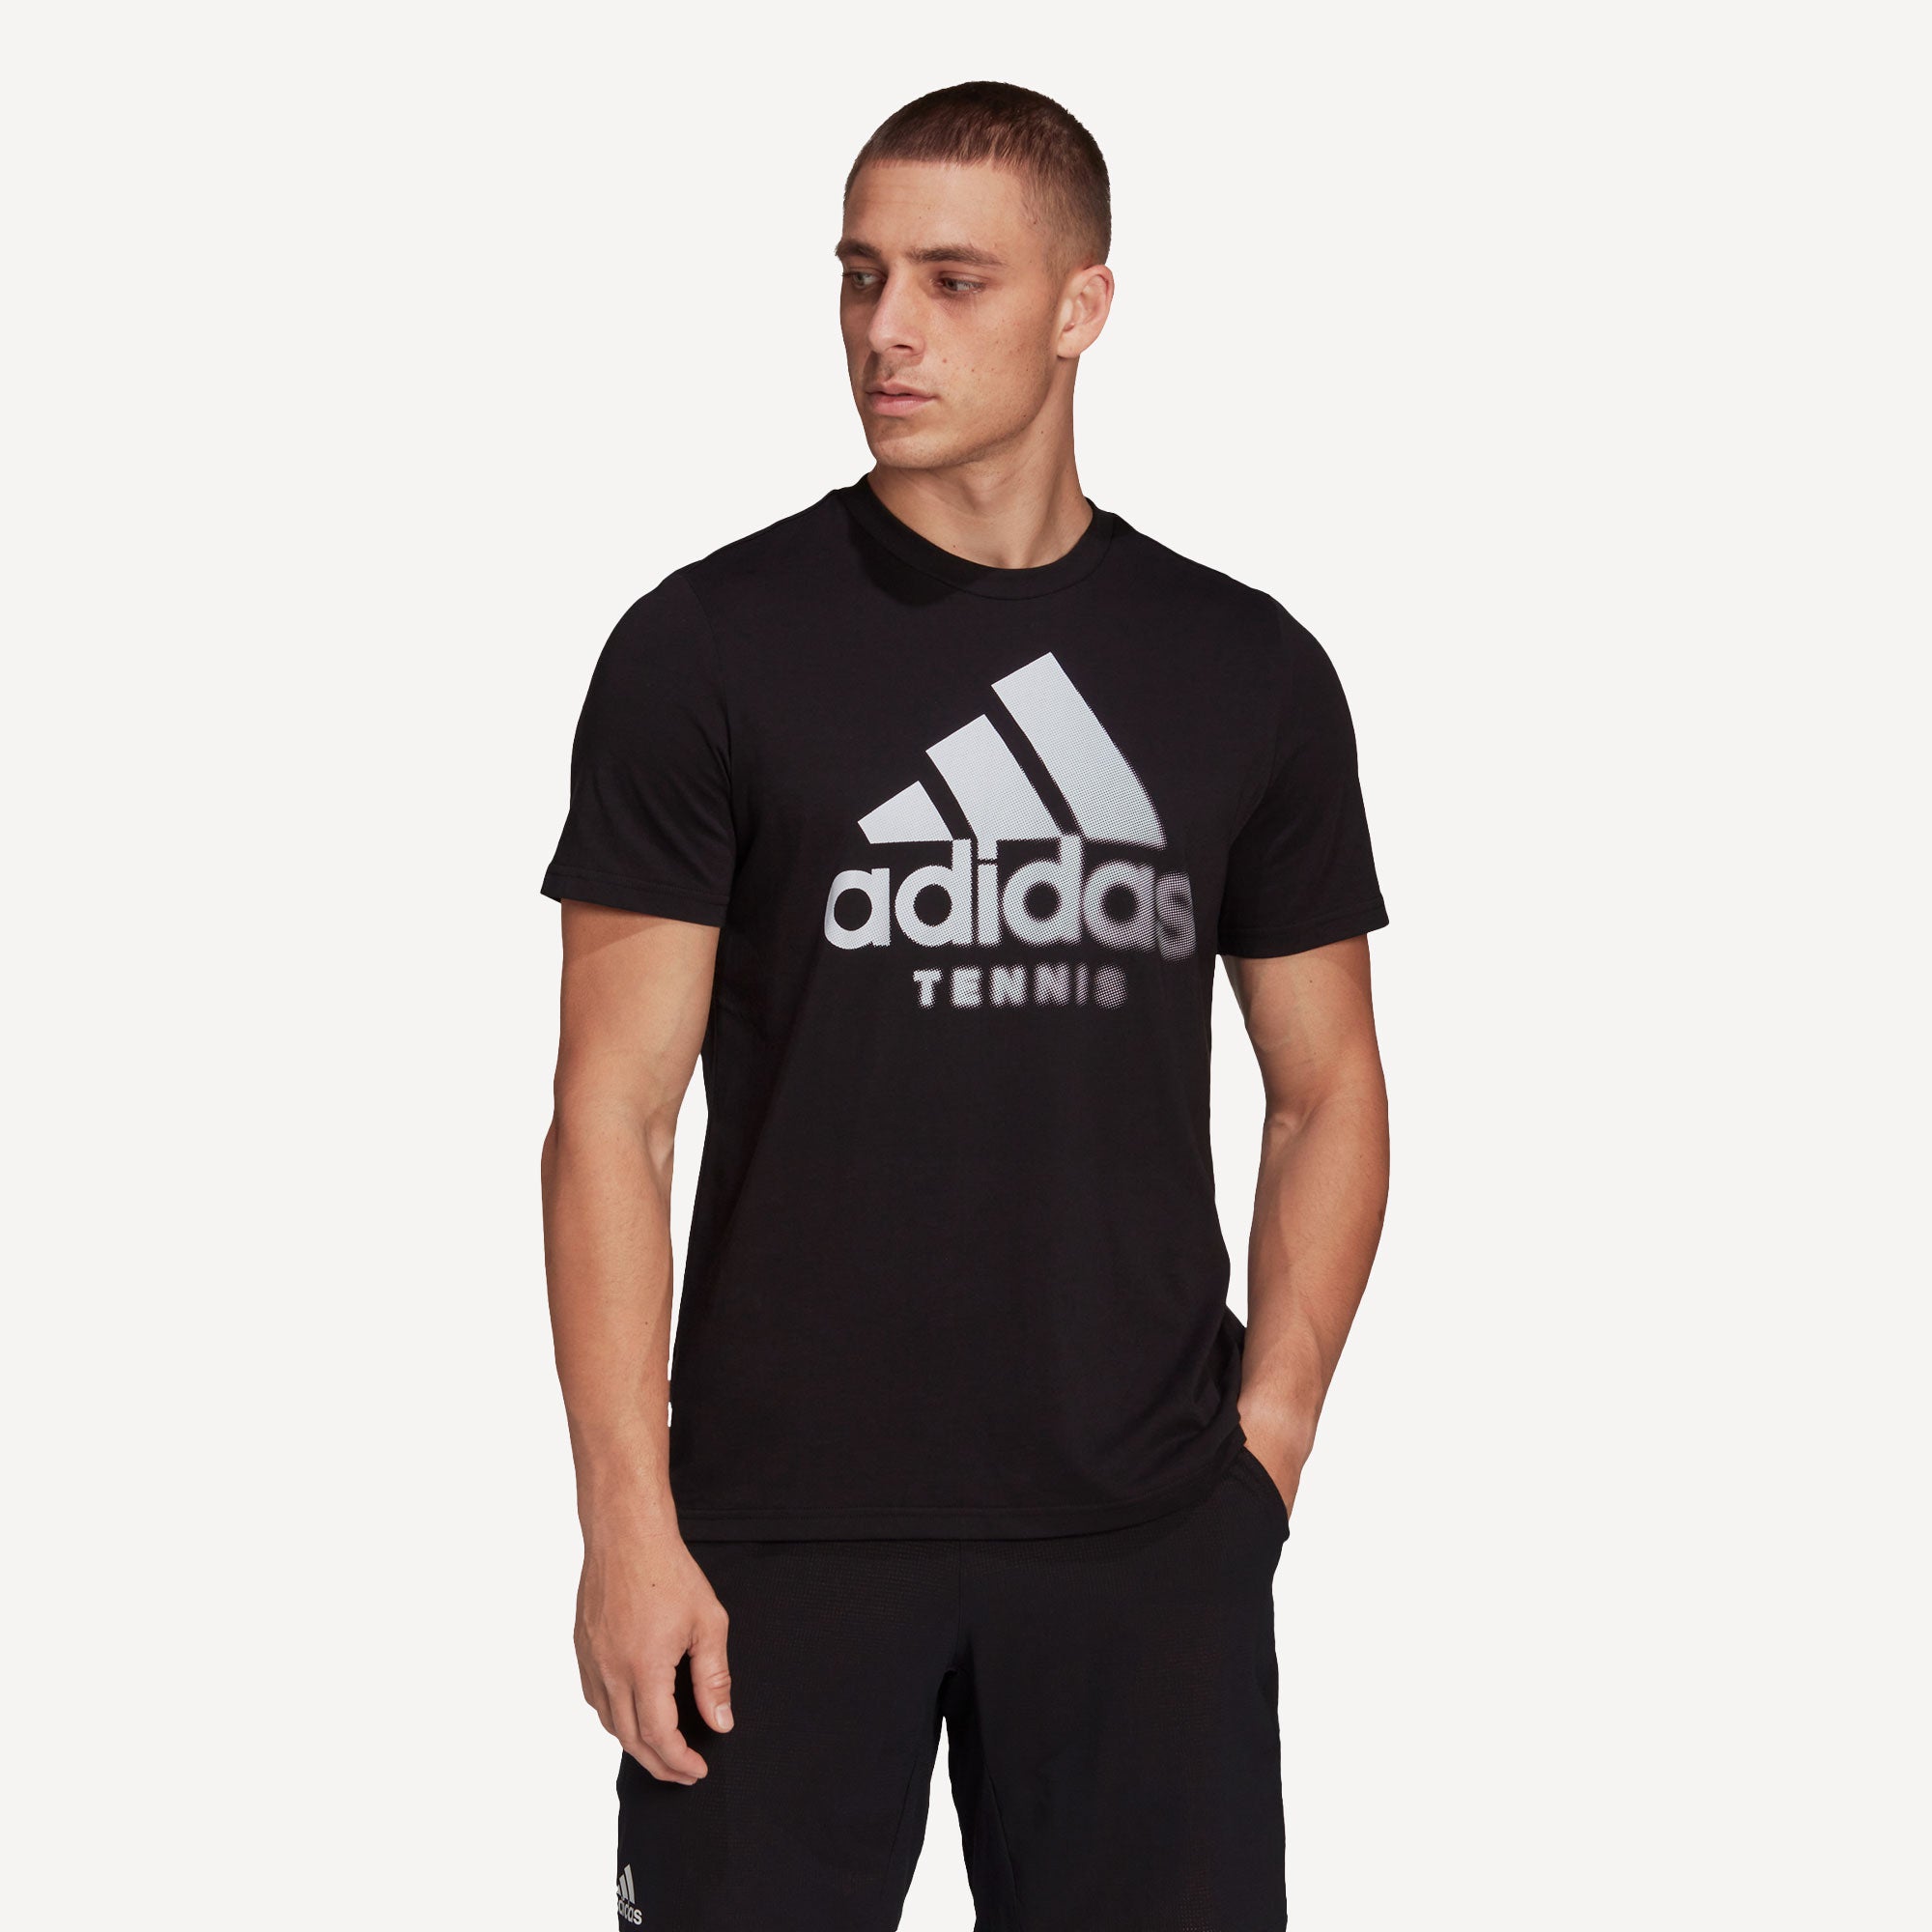 adidas Men's Graphic Tennis T-Shirt Black (1)